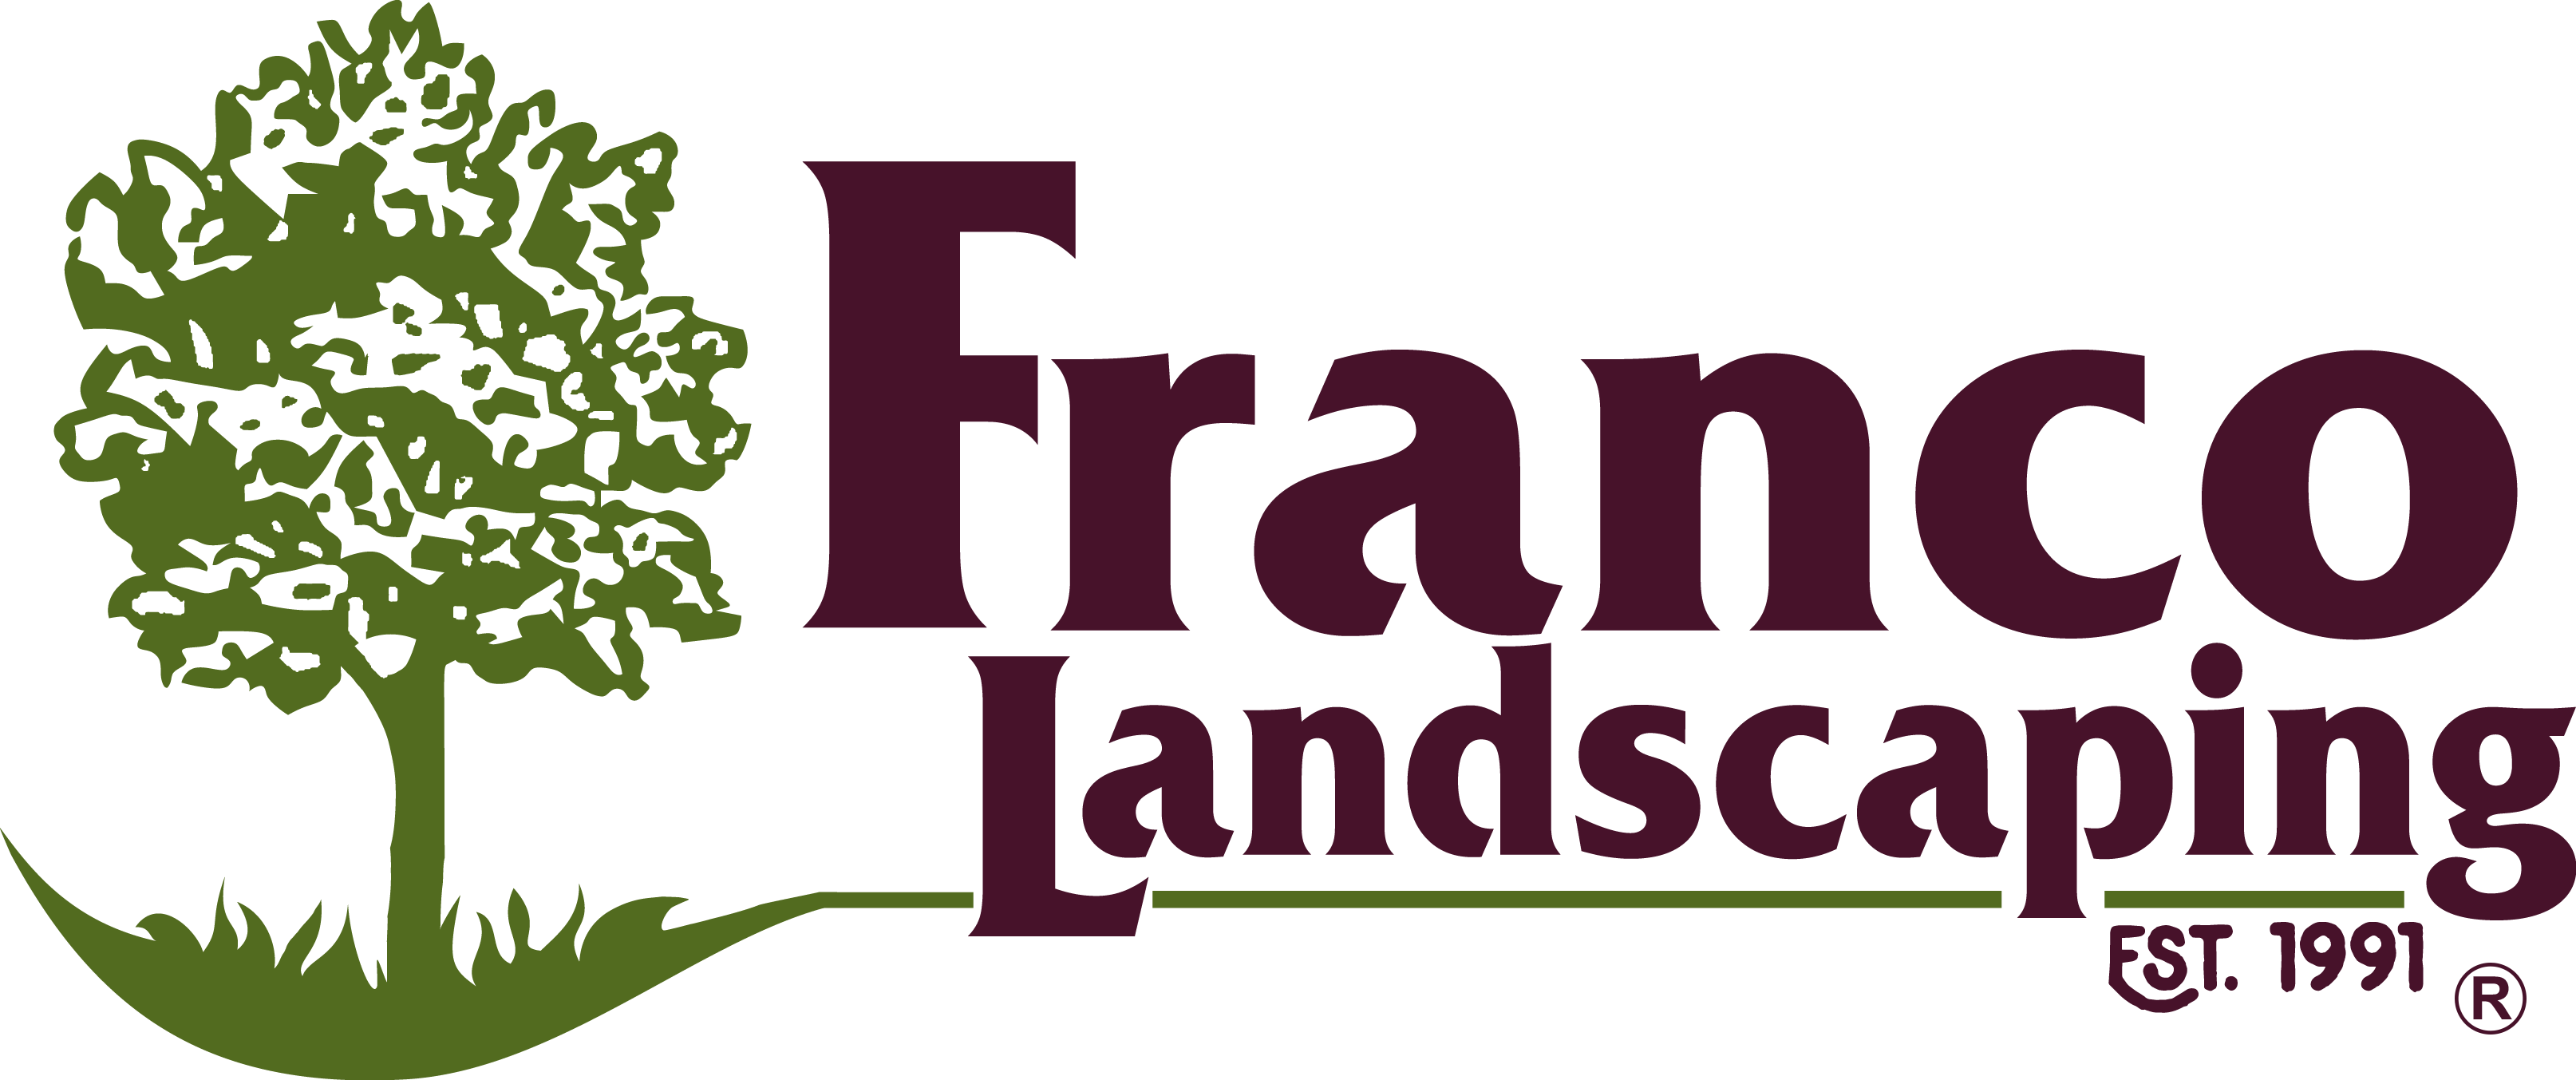 Franco Landscaping Logo
